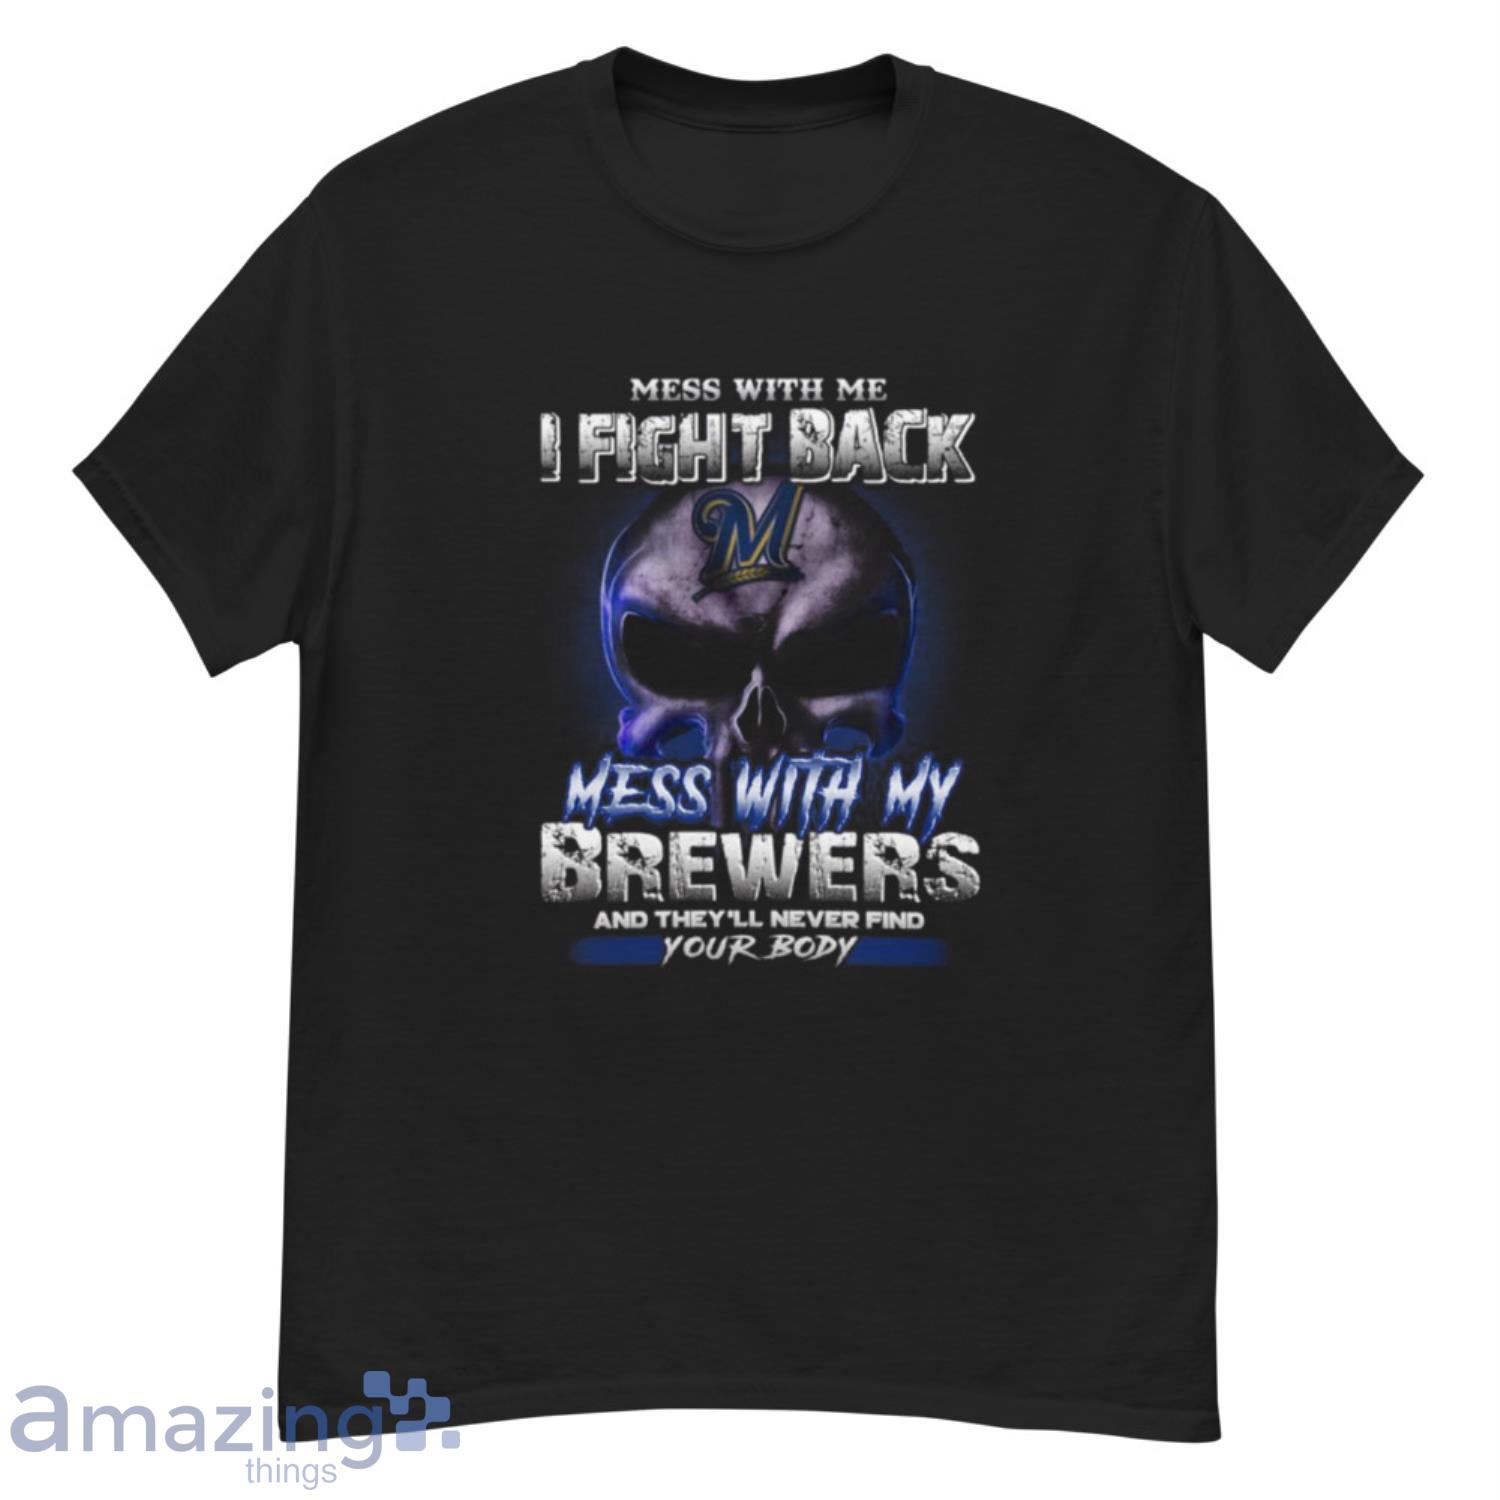 brewers shirt near me